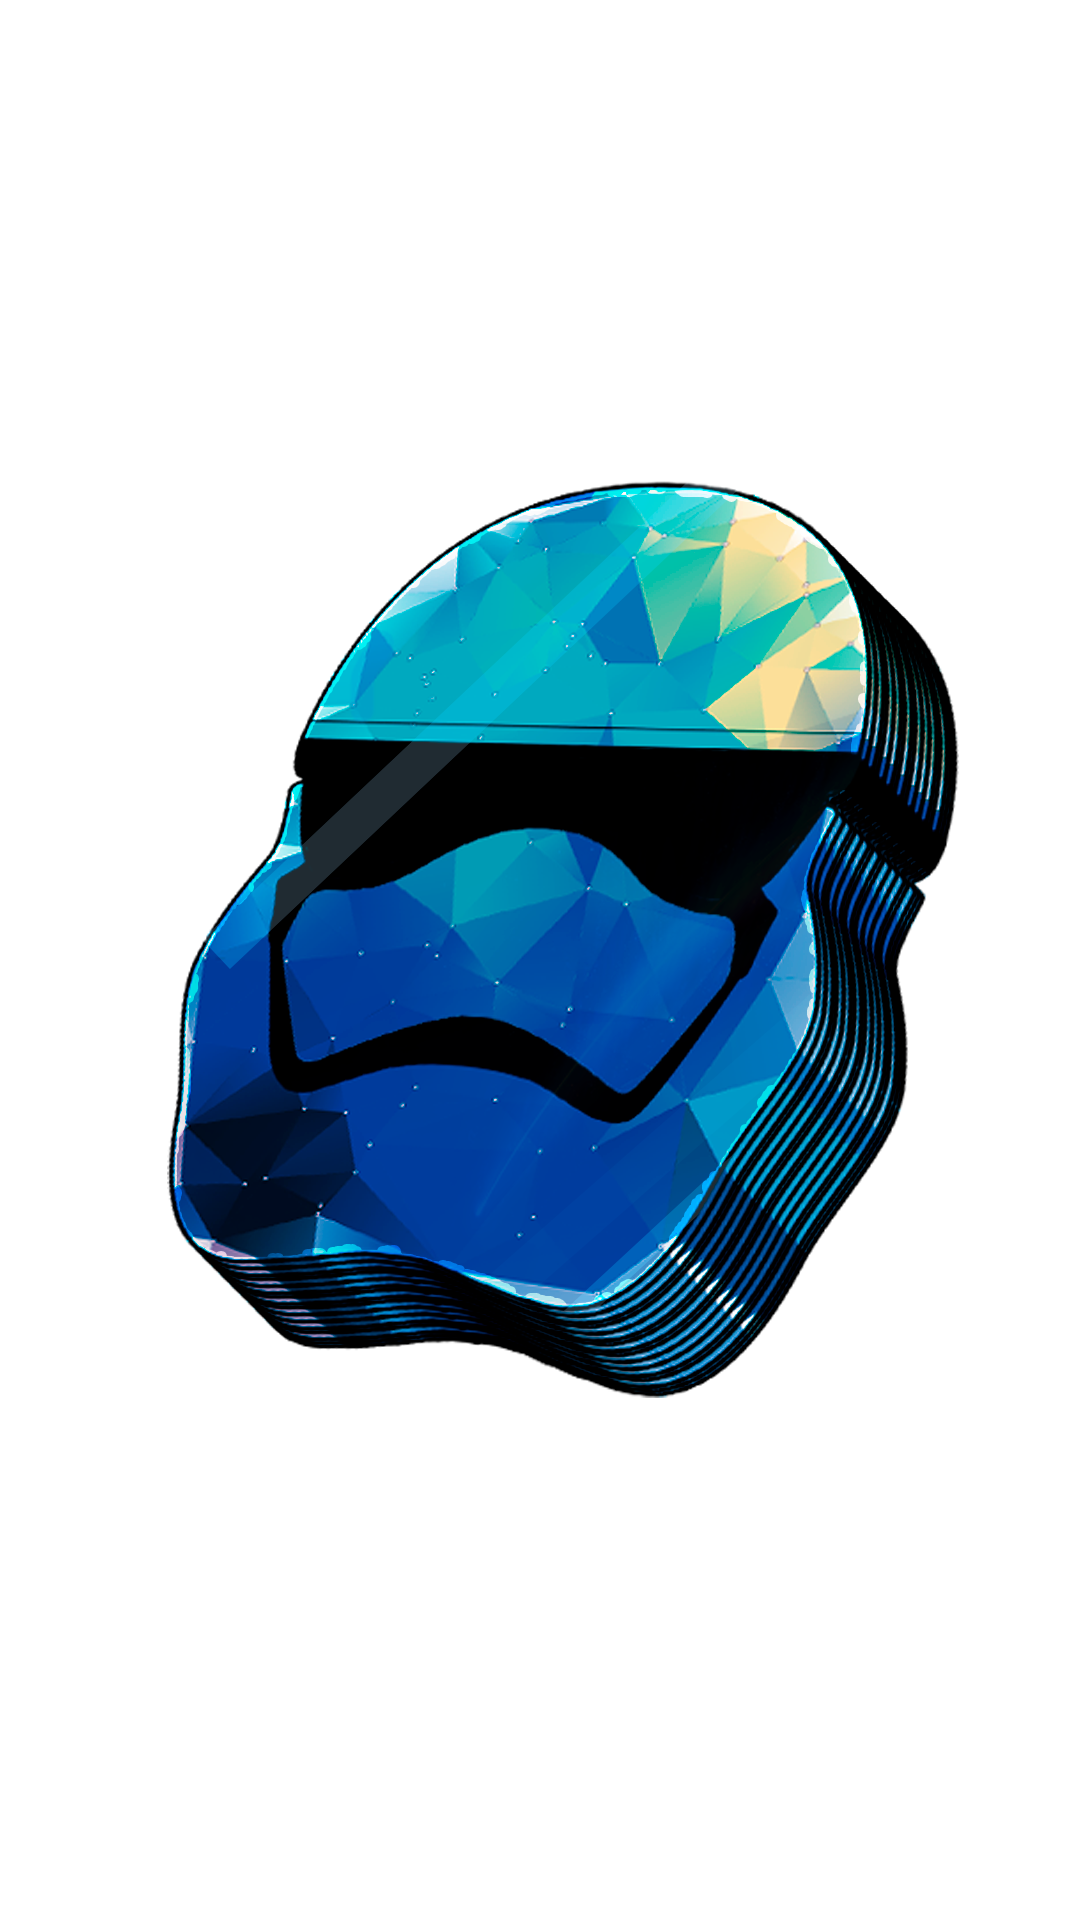 General 1080x1920 stormtrooper illustration Star Wars movie characters portrait display digital art simple background